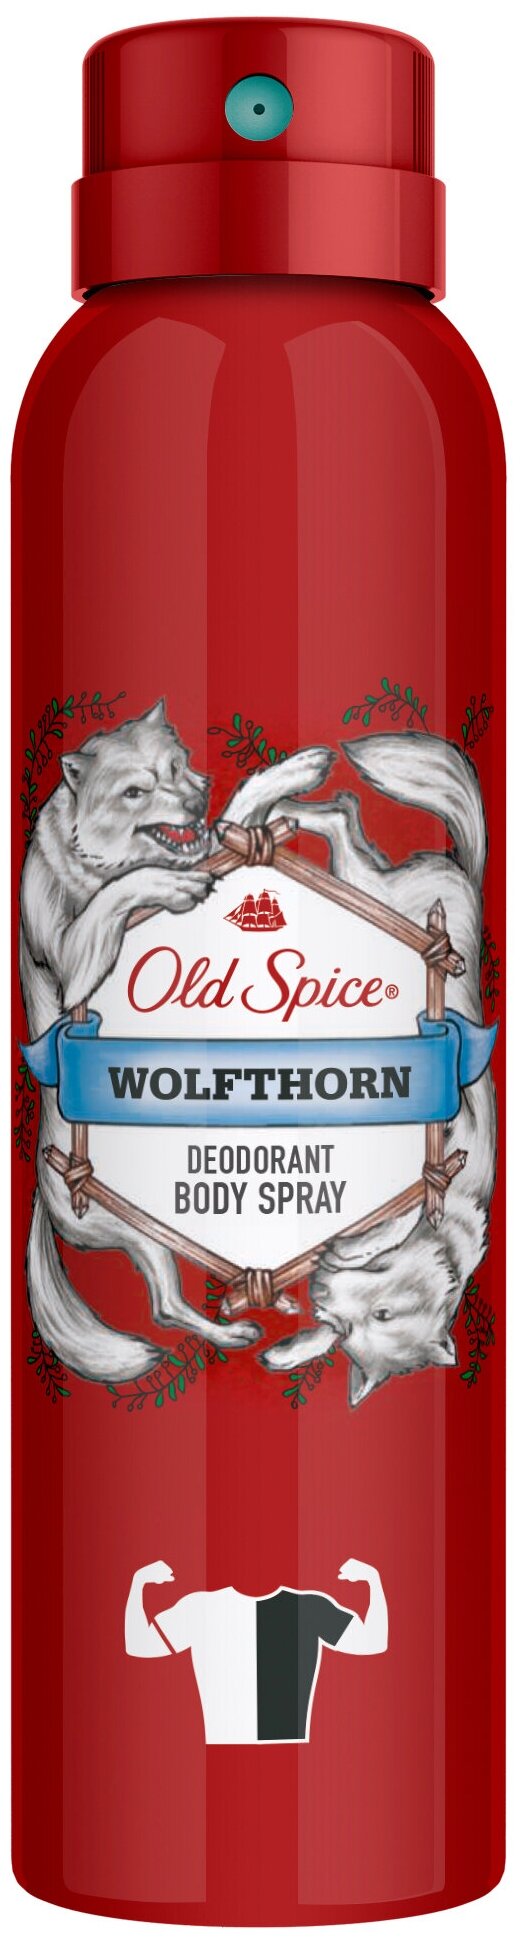 фото Дезодорант-спрей для тела old spice wolfthorn мужской 250 мл